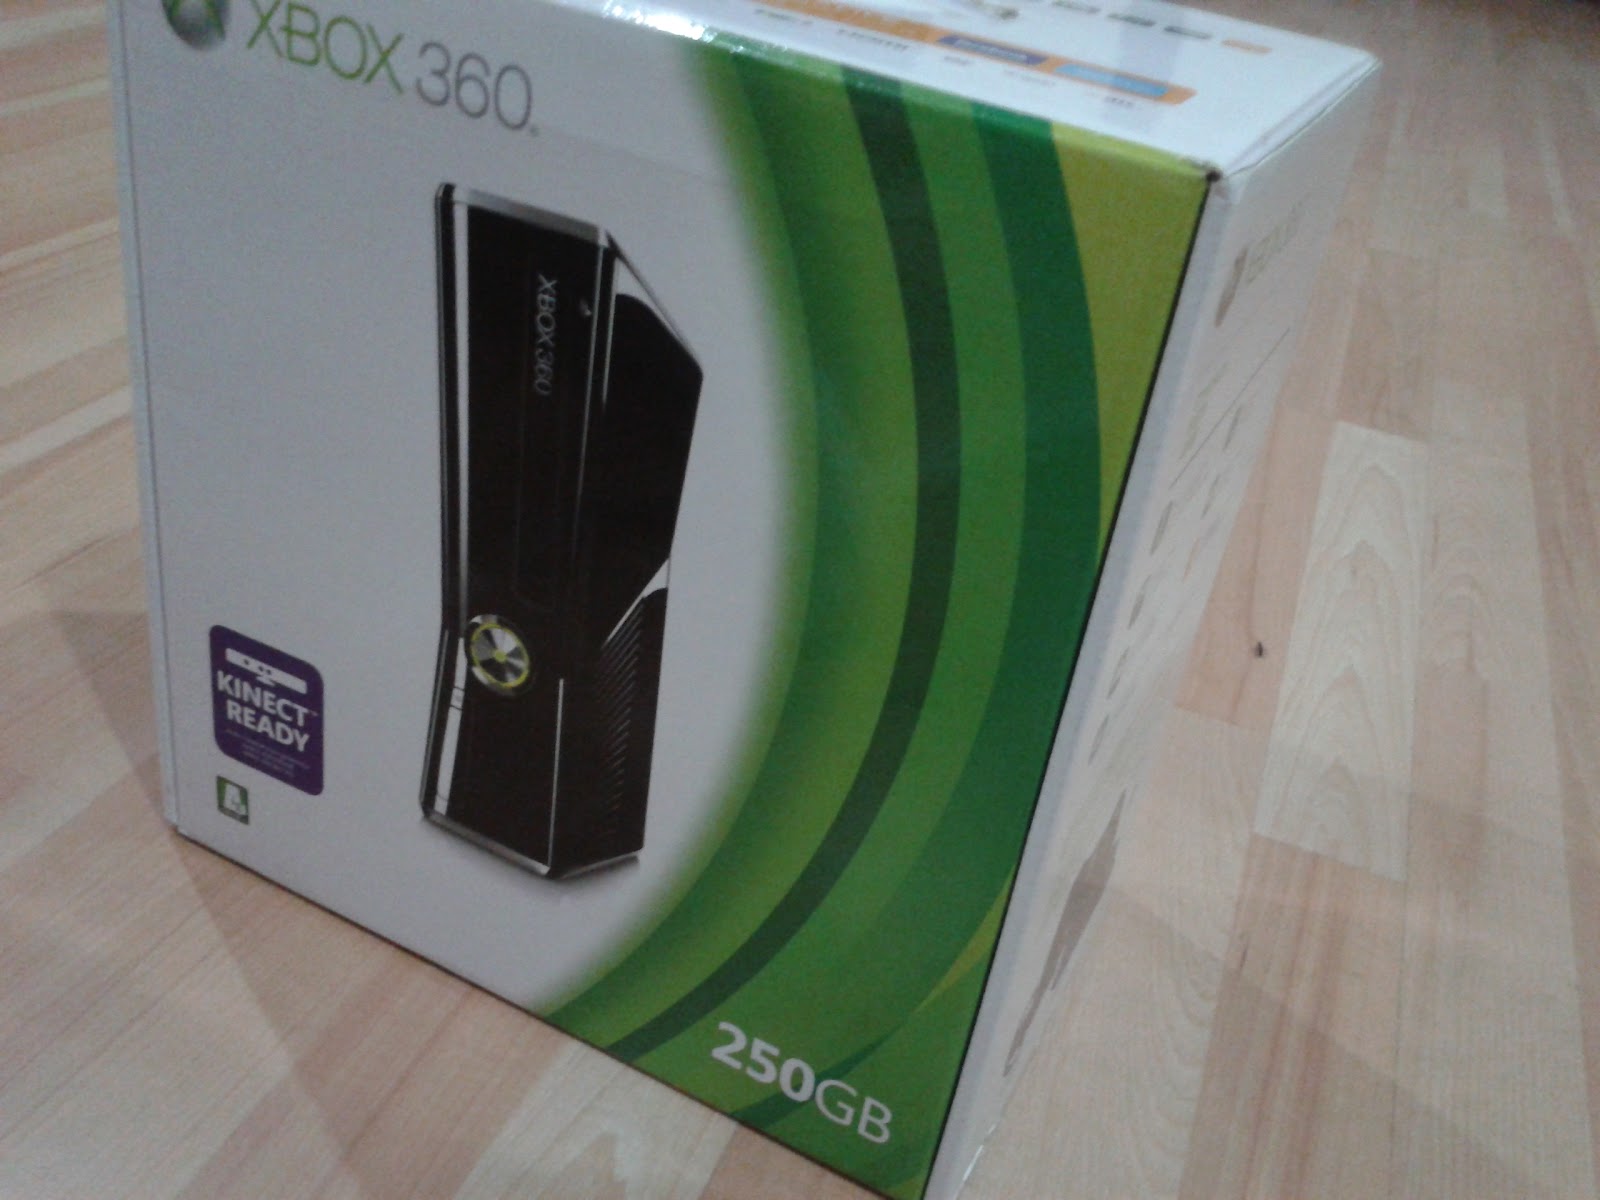 Фрибут 500 рублей. Xbox 360 Slim 250gb. Xbox 360 Slim freeboot. Коробка от Xbox 360 Slim. Xbox 360 Slim с коробкой.